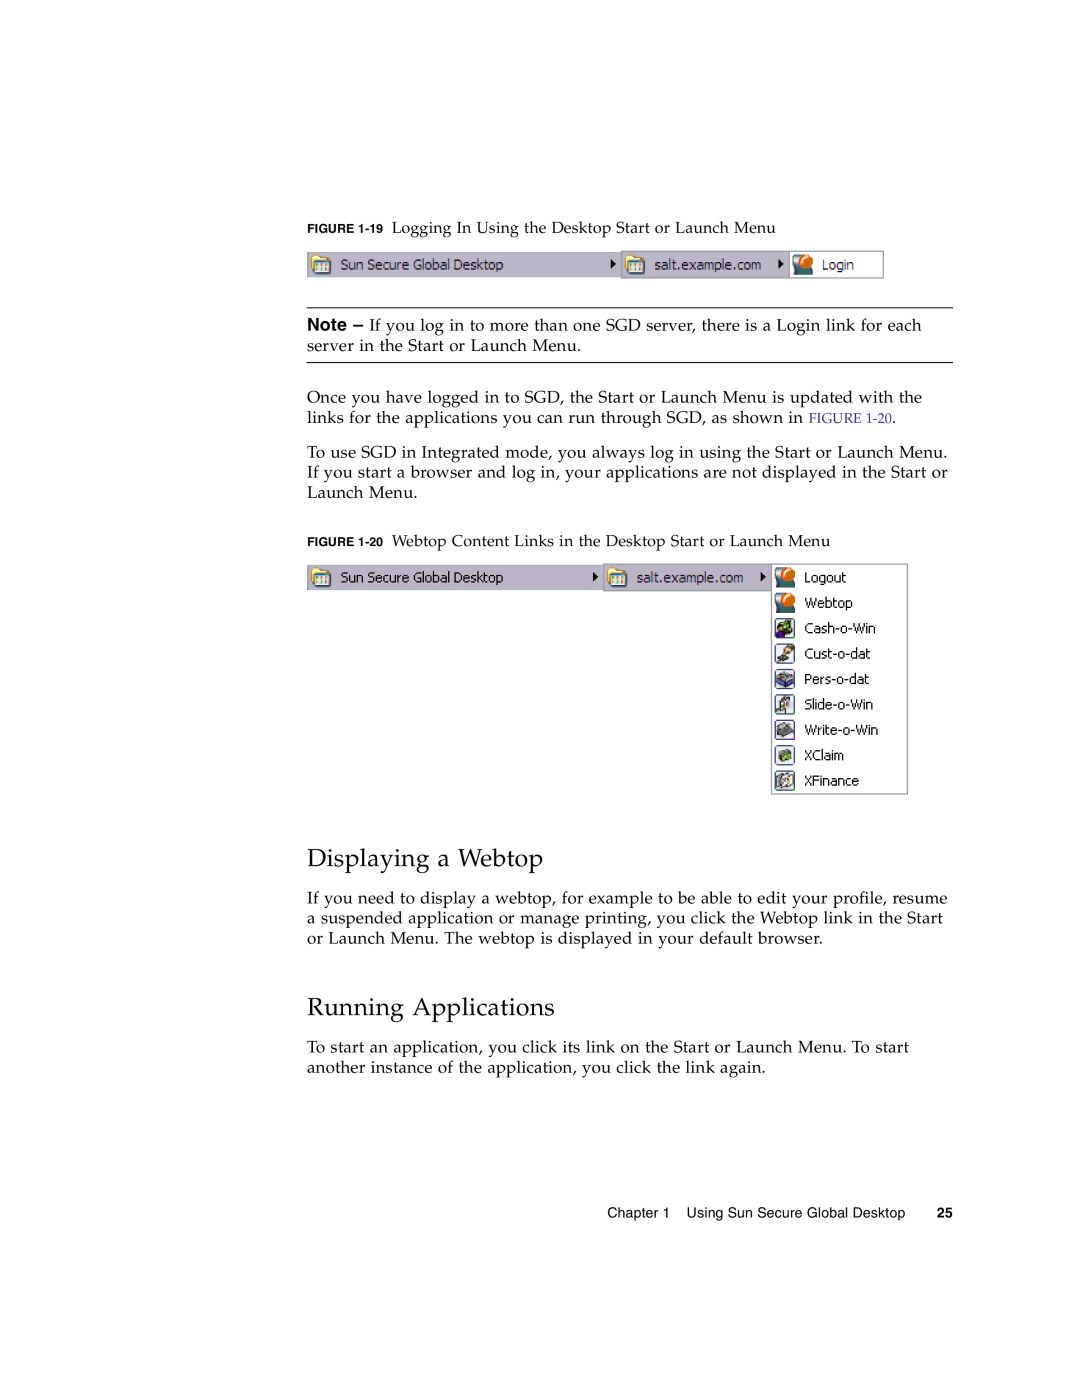 Sun Microsystems 4.5 manual Displaying a Webtop, Running Applications, 19 Logging In Using the Desktop Start or Launch Menu 